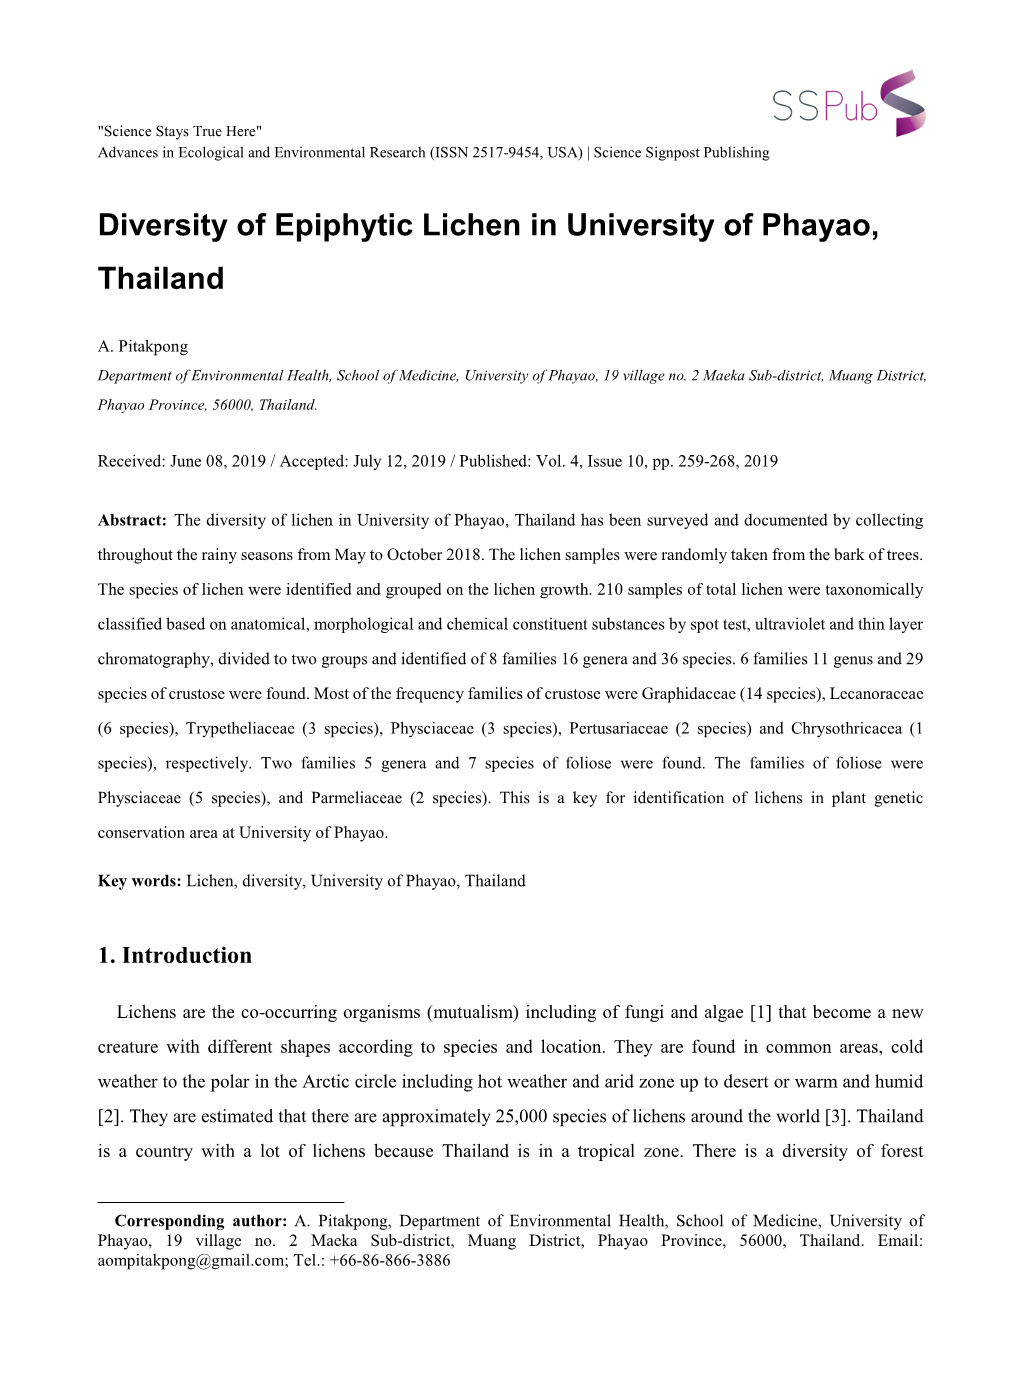 Diversity of Epiphytic Lichen in University of Phayao, Thailand